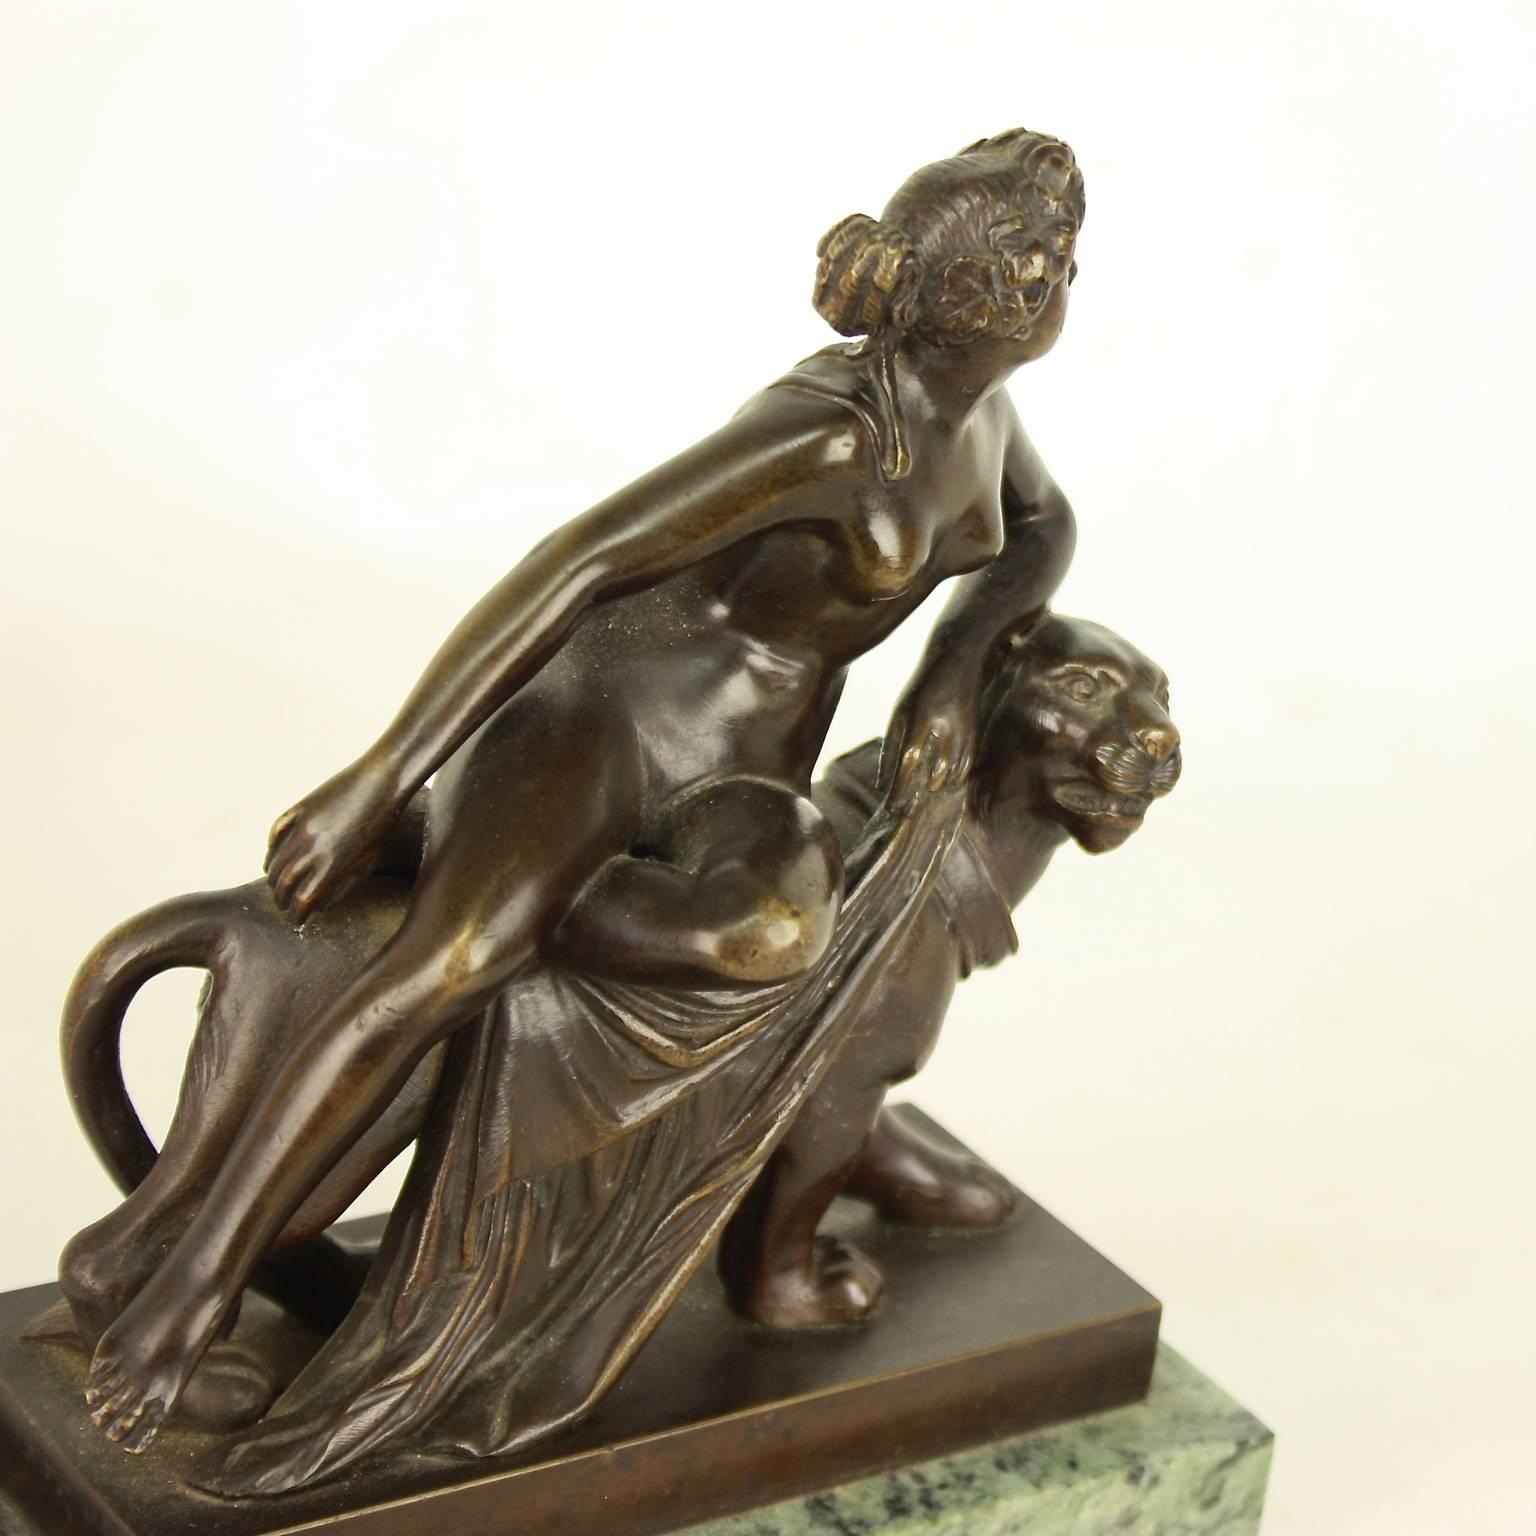 Empire Small Bronze Sculpture of 'Ariadne Riding a Panther' after Dannecker